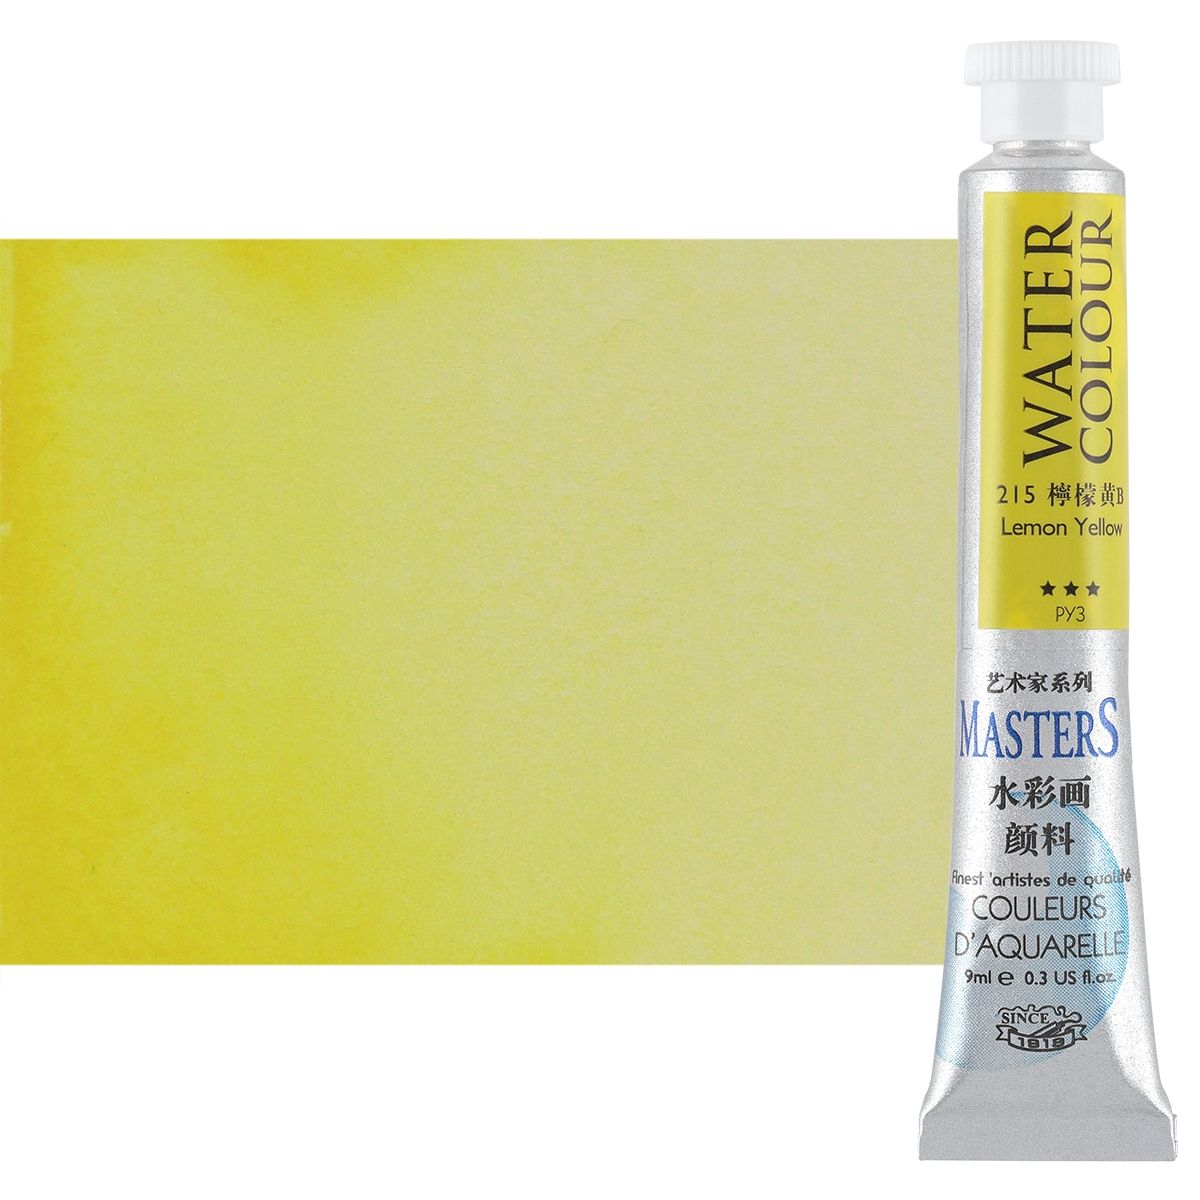 Marie's Master Quality Watercolor 9ml Lemon Yellow